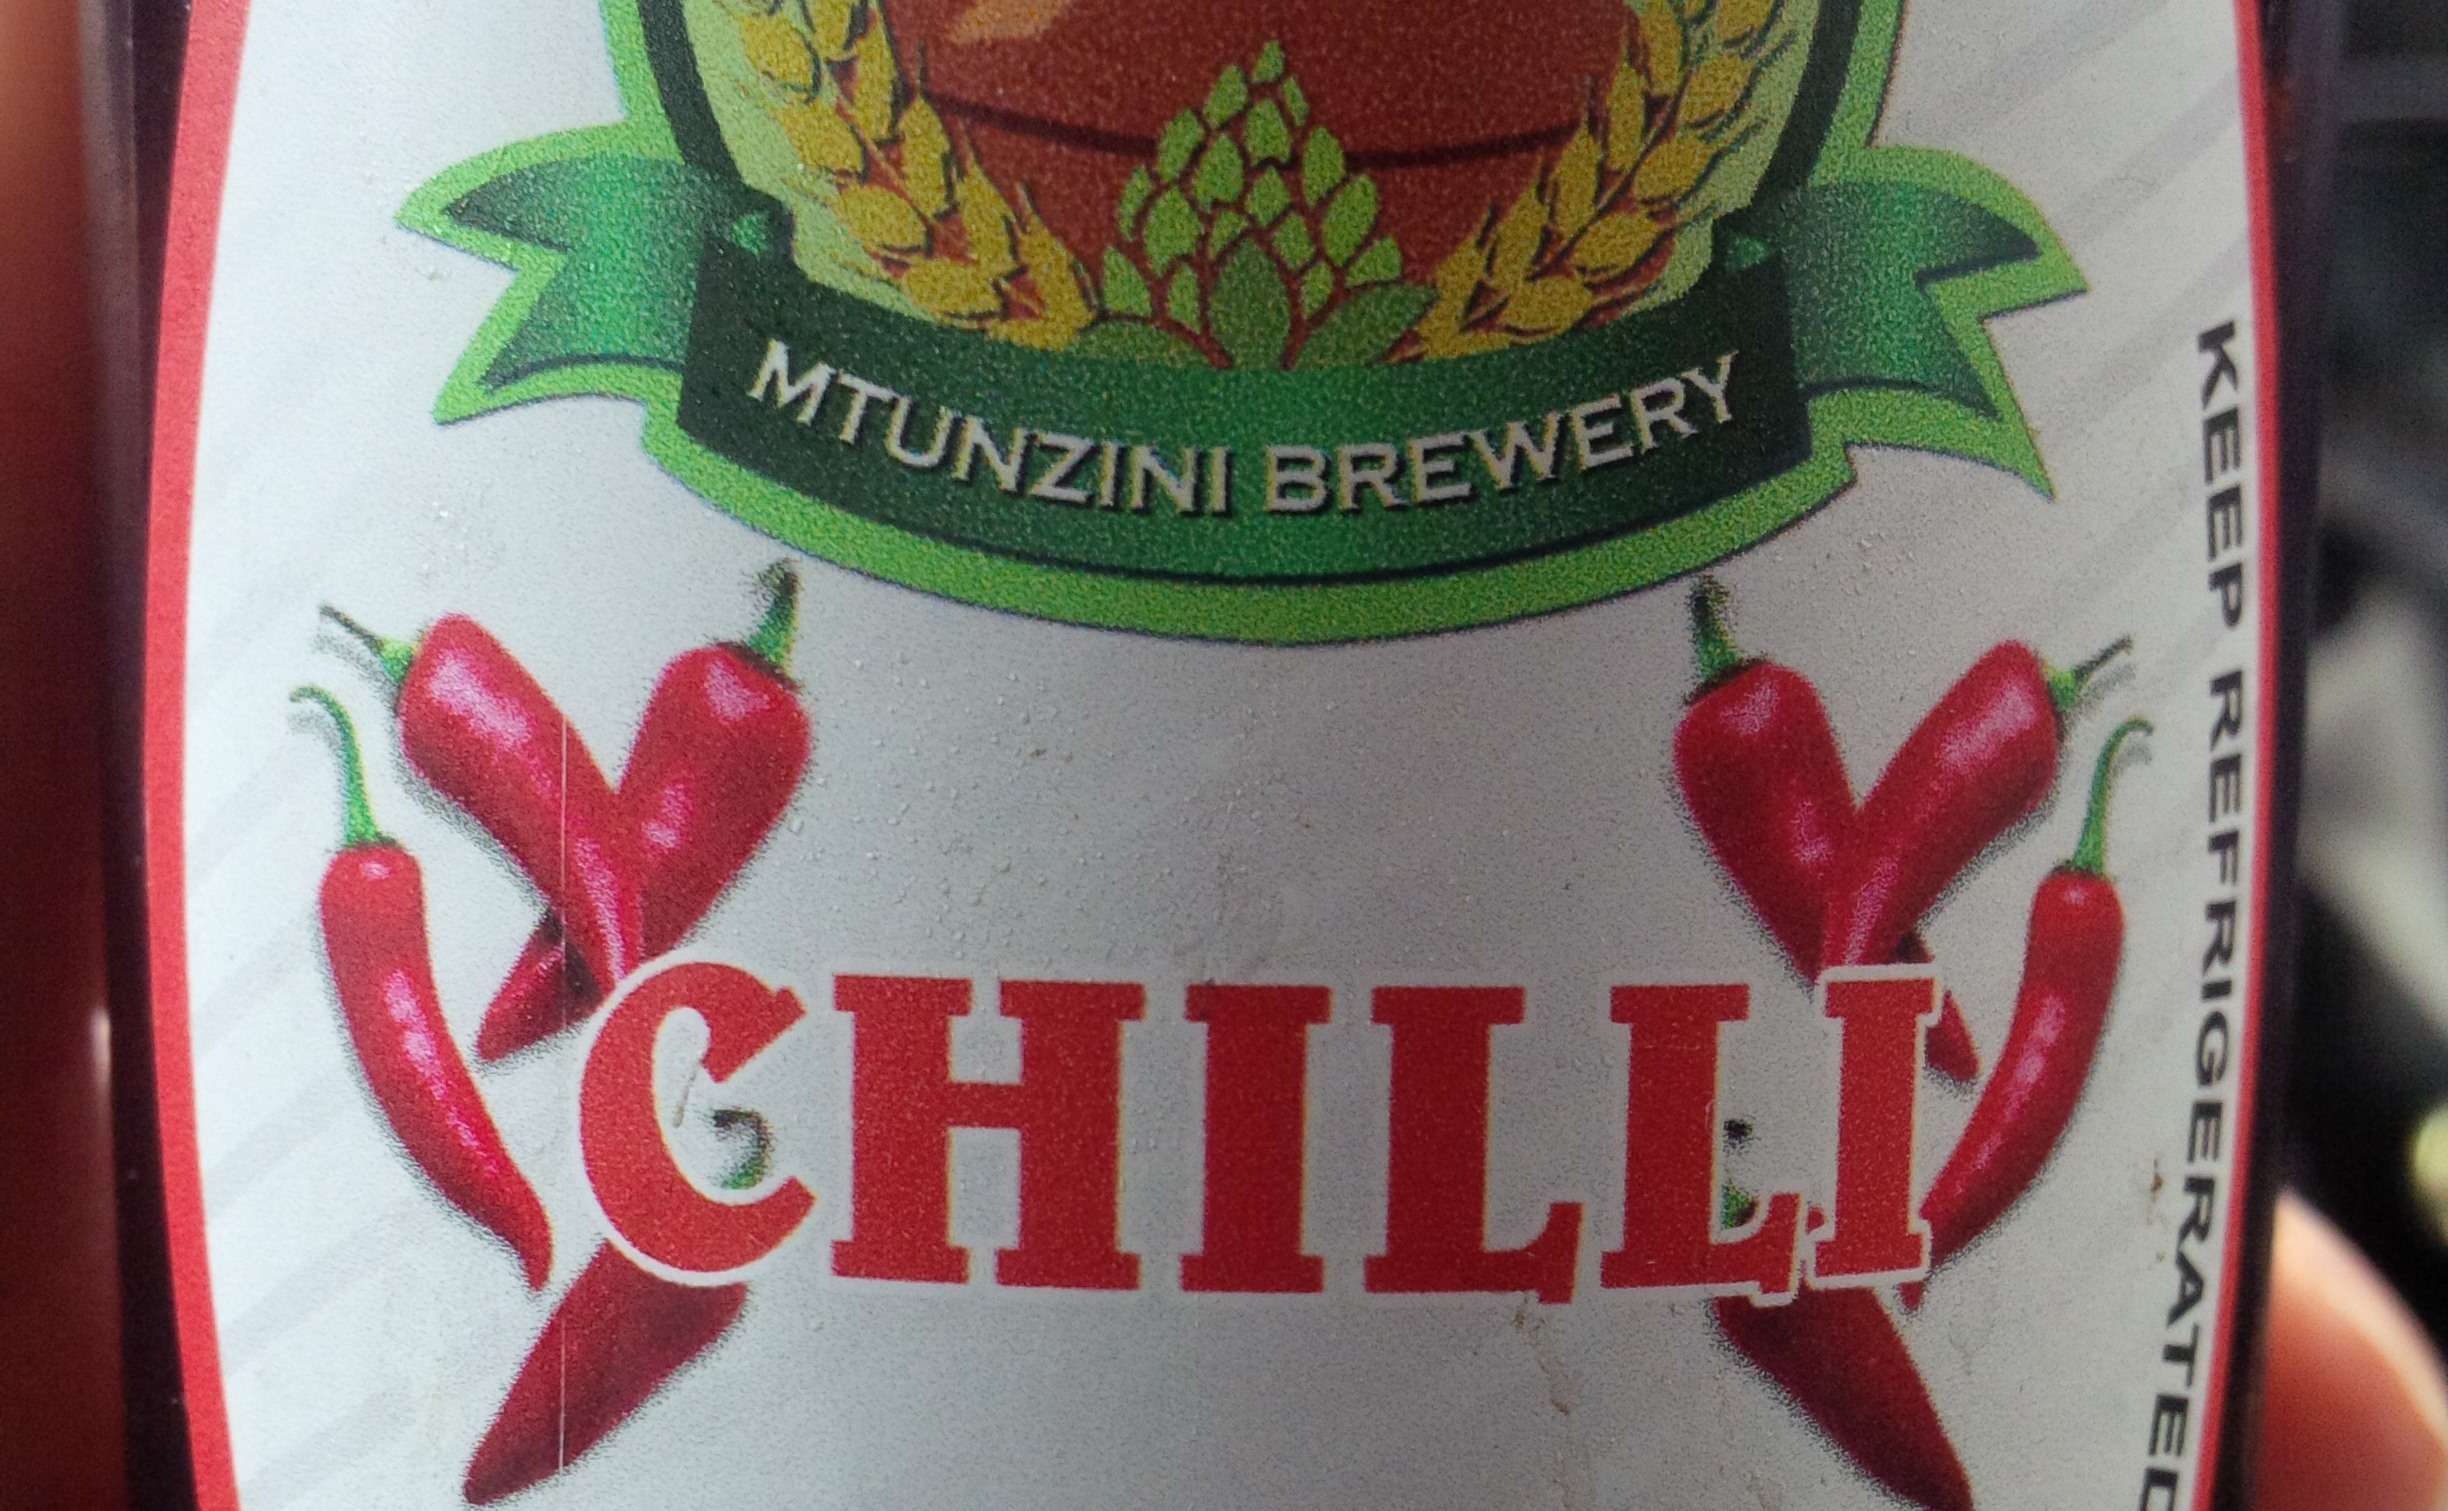 Beer review: Mtunzini Chilli Beer